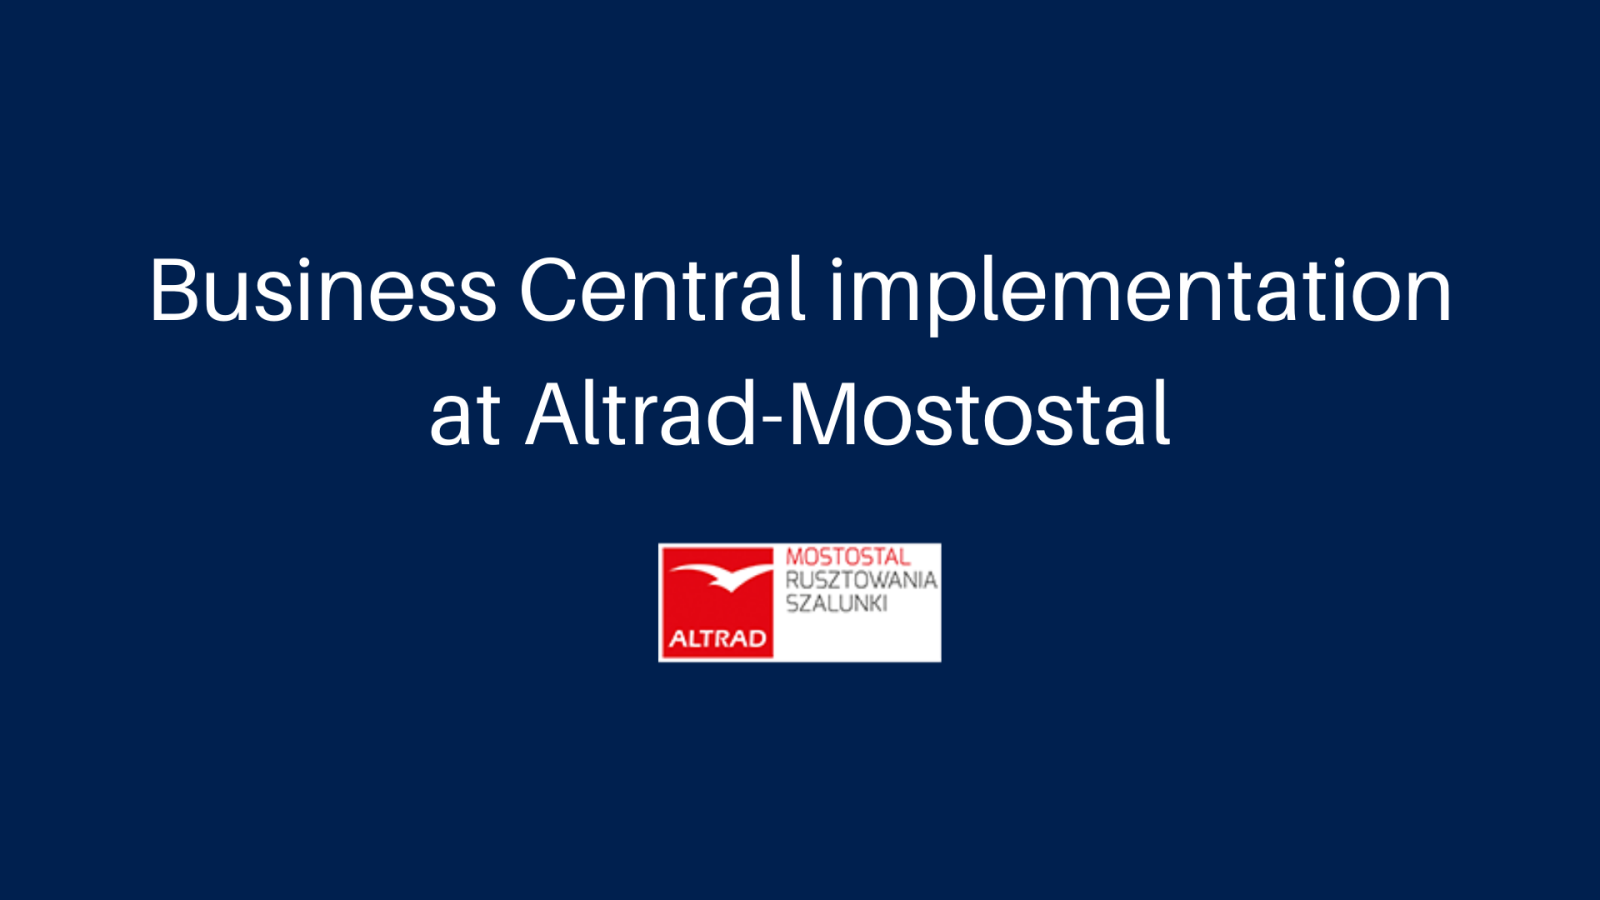 Business Central implementation at Altrad-Mostostal